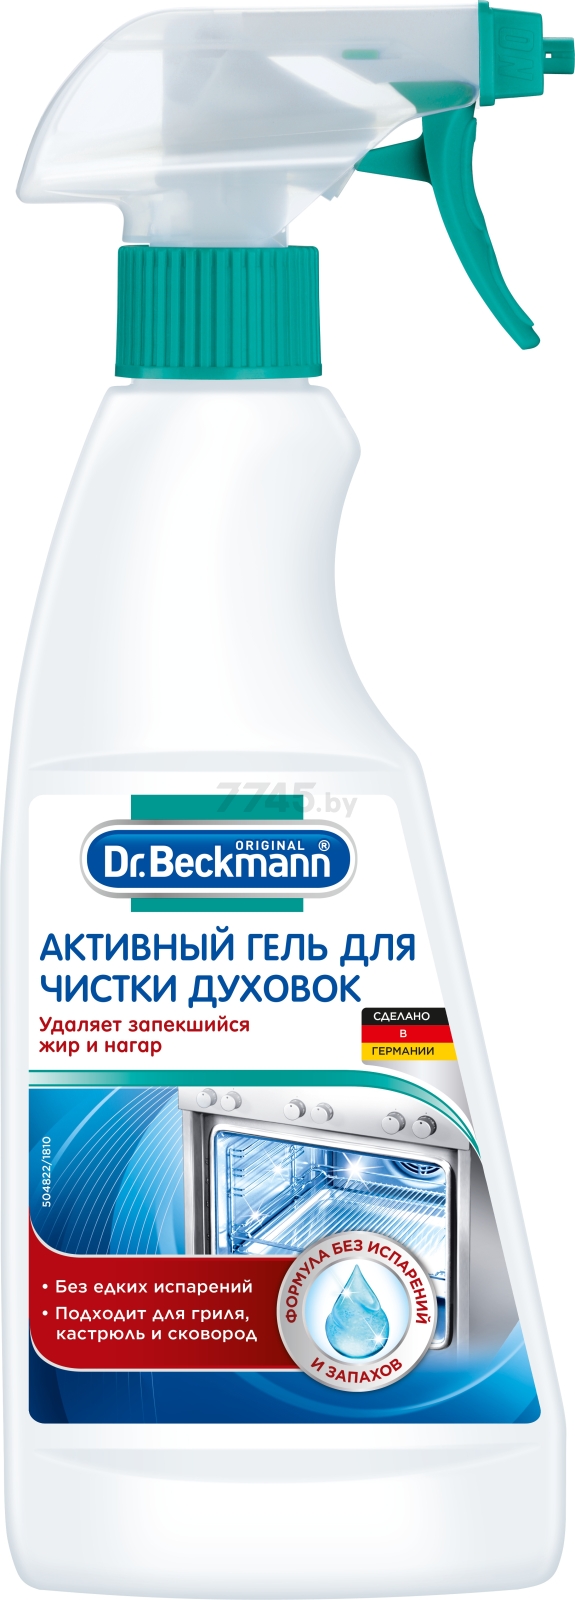 Средство чистящее DR.BECKMANN Для духовок 0,375 л (4008455002057)